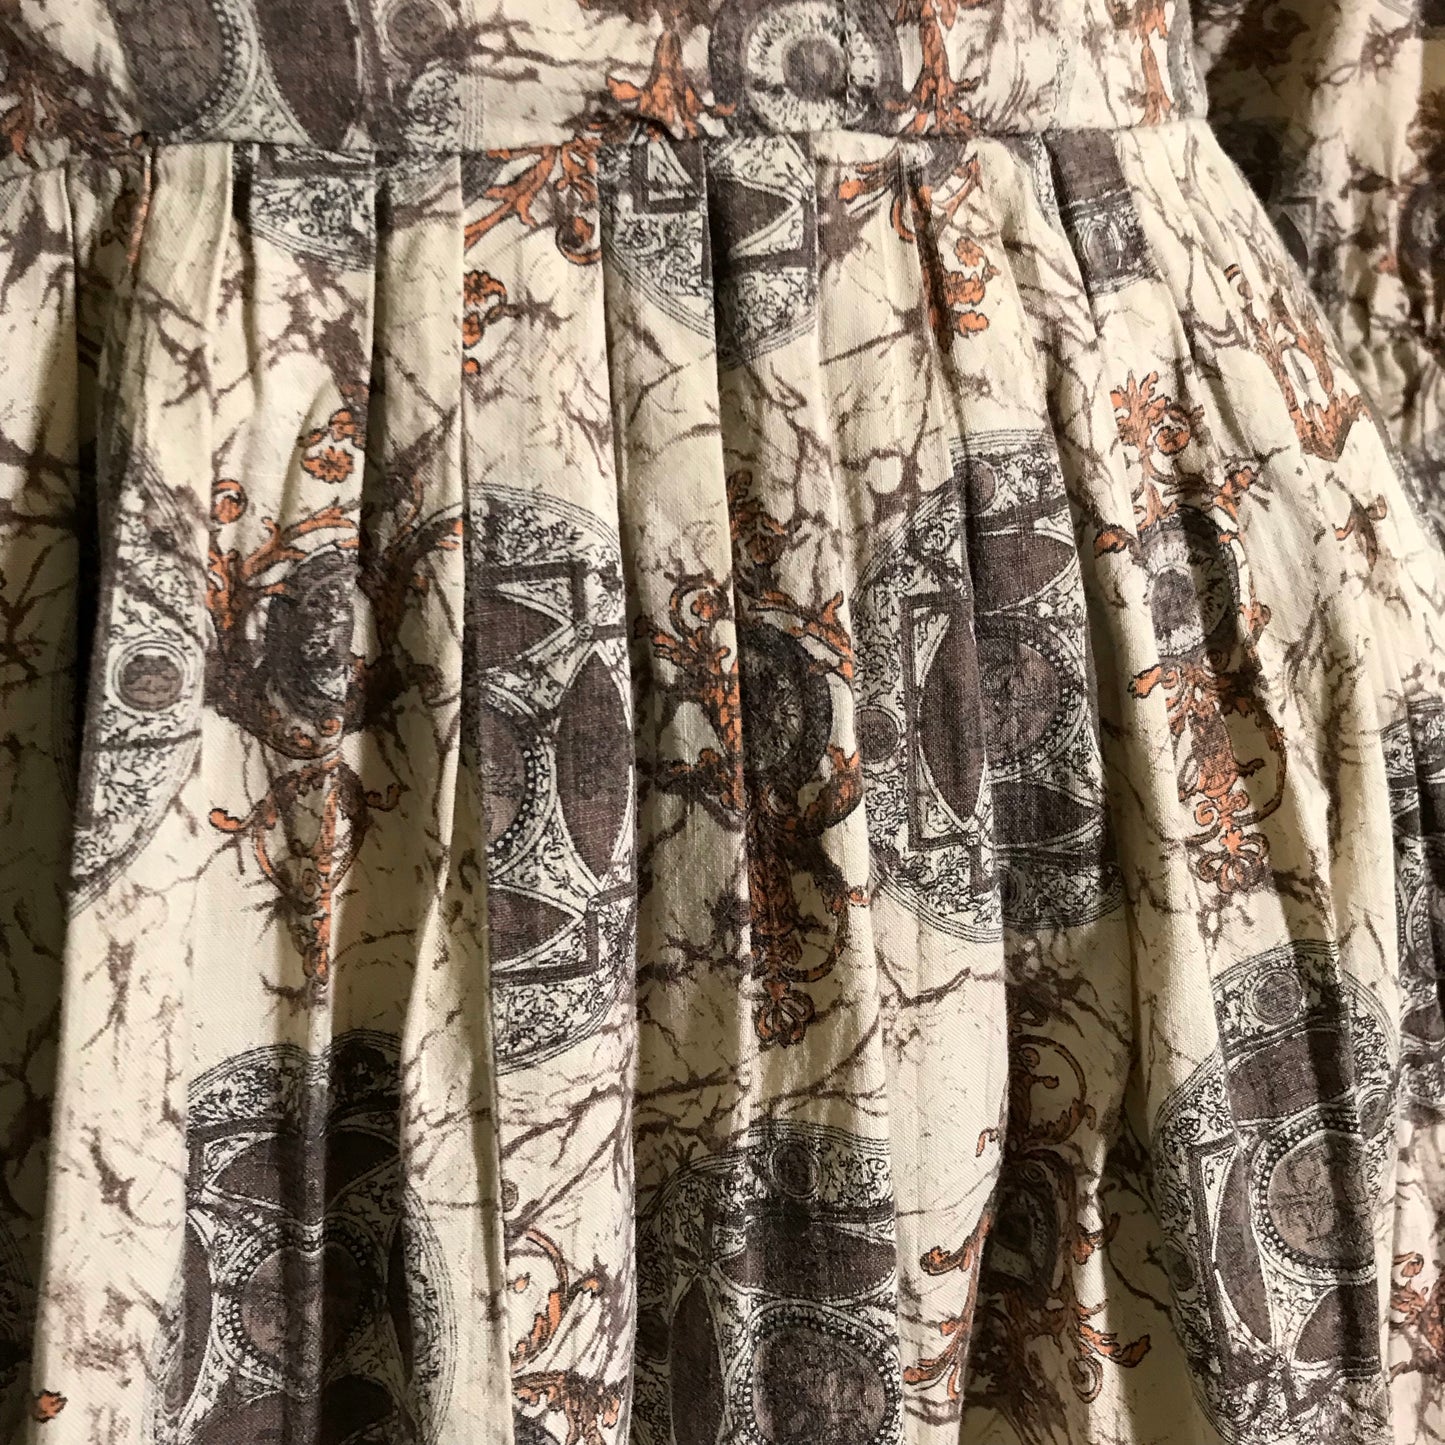 Batik Look Roman Architecture Novelty Print Dress circa 1960s